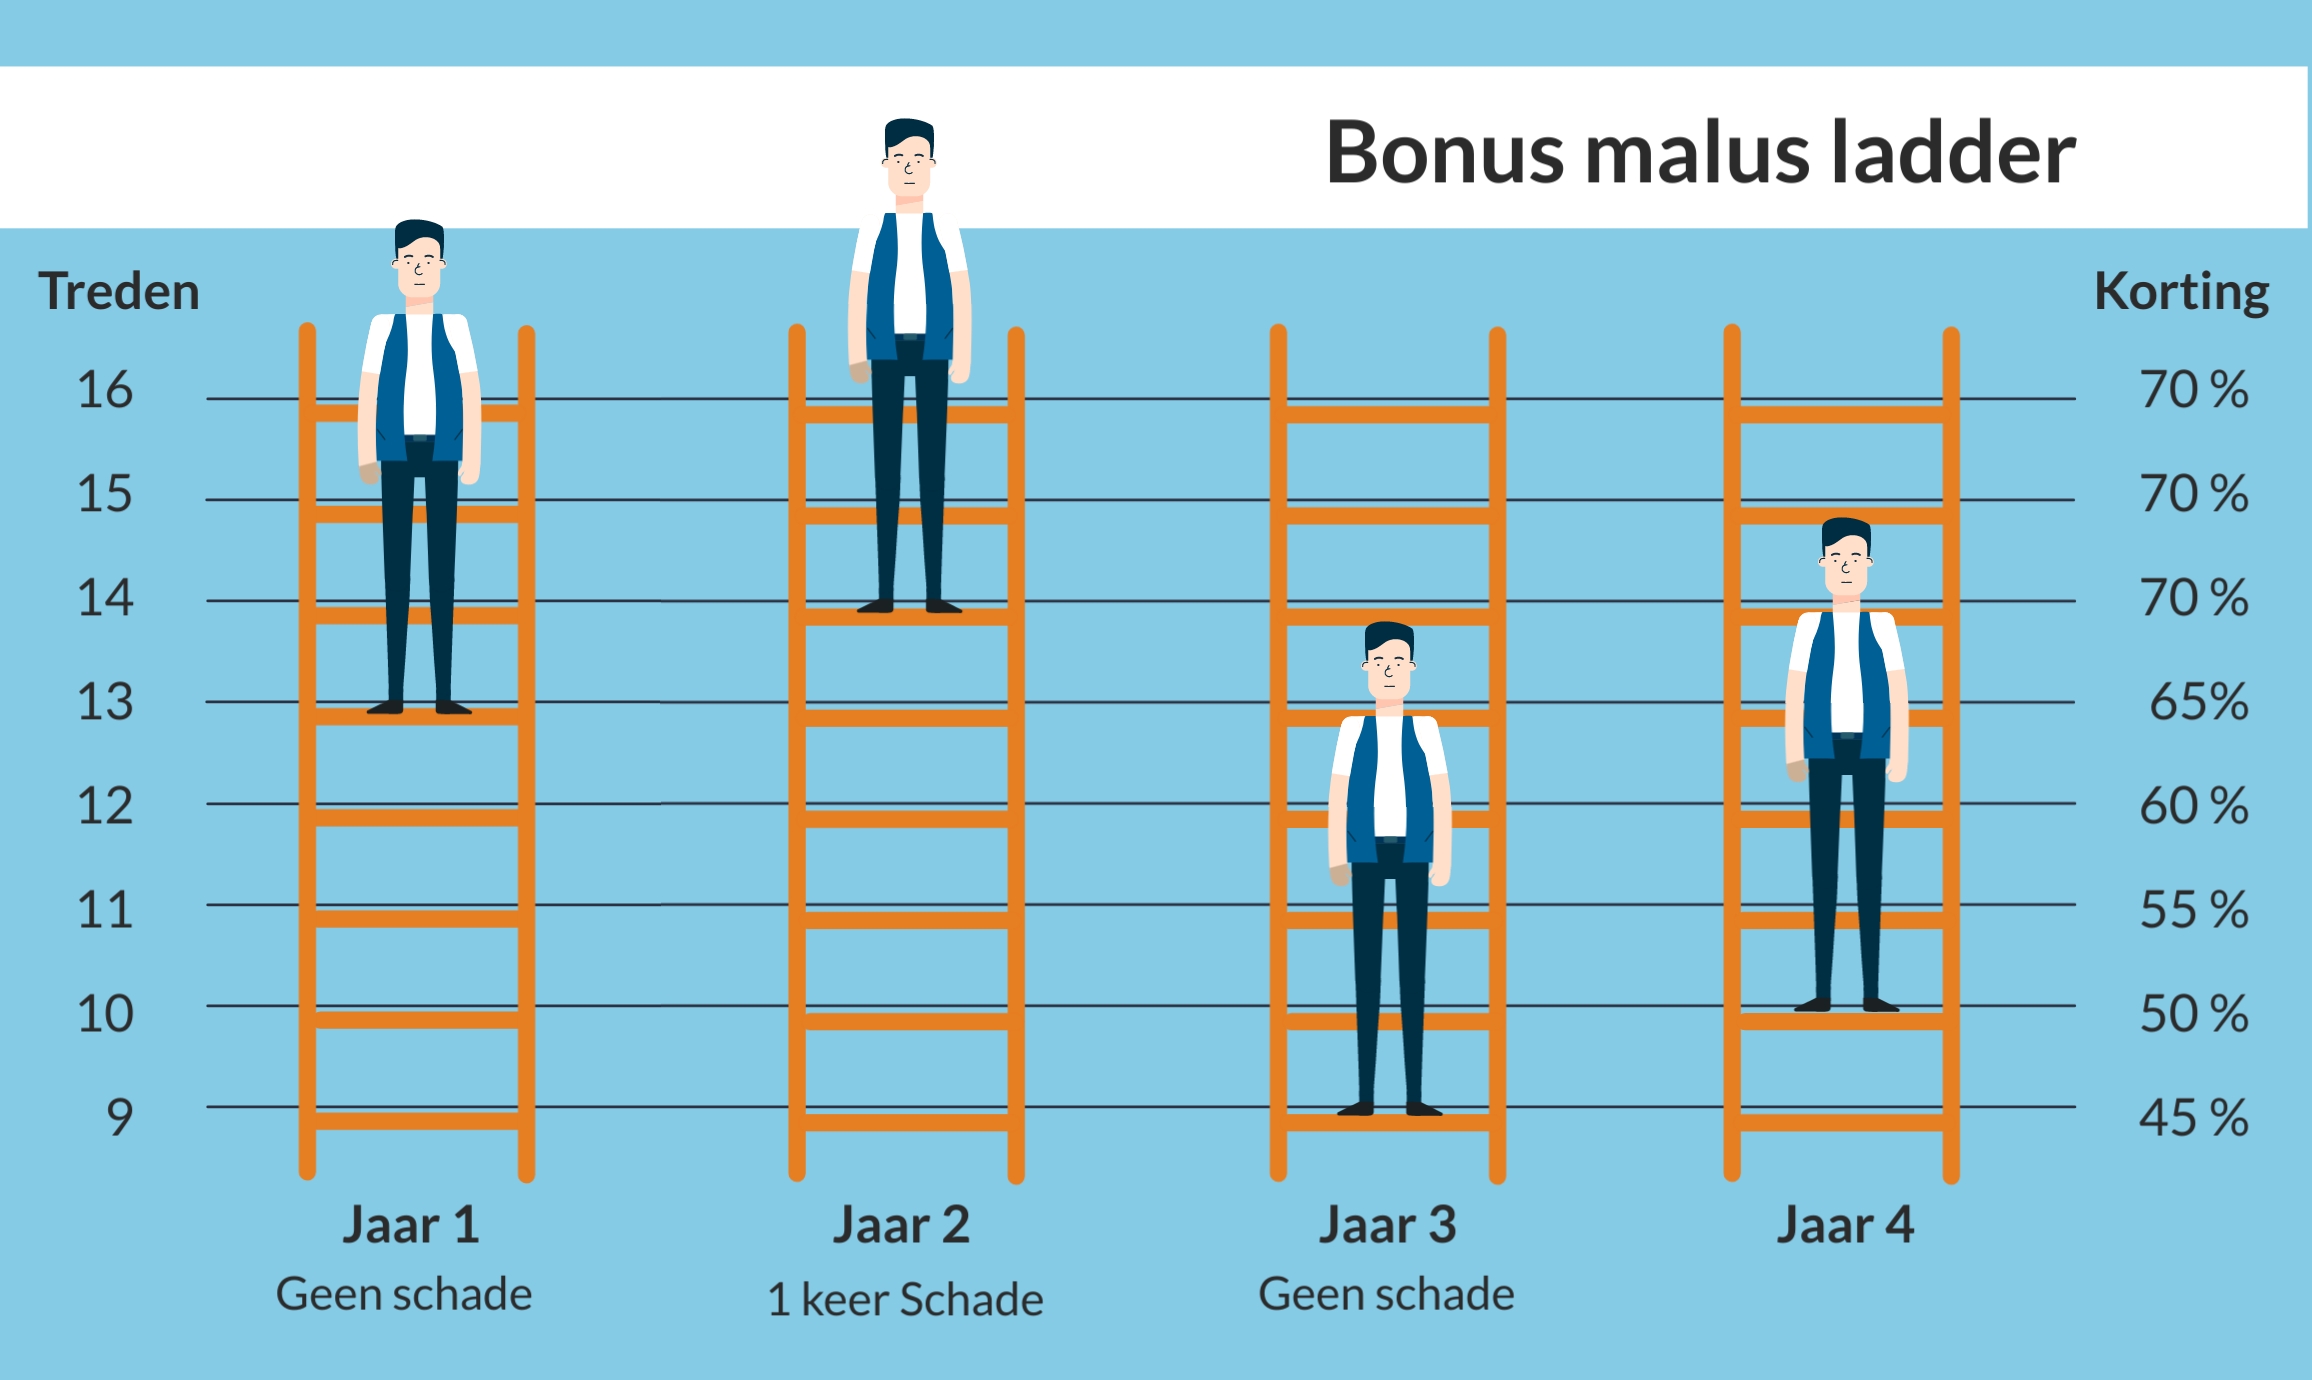 Bonus Malus